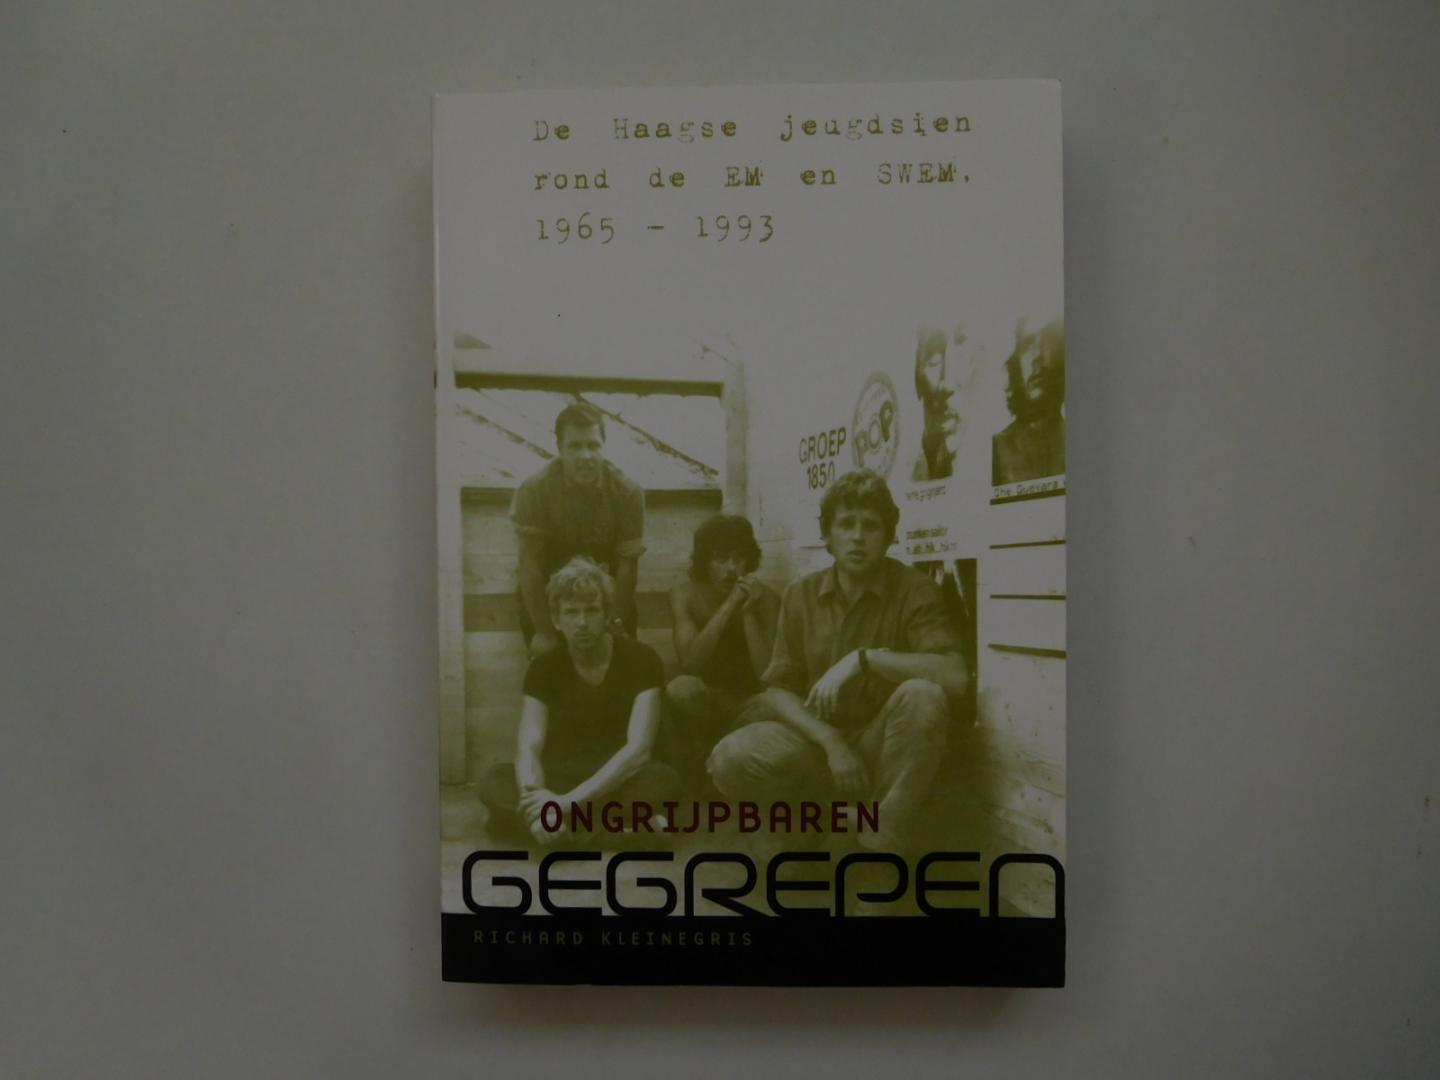 Richard Kleinegris - Ongrijpbaren gegrepen, de Haagse jeugdsien rond de EM en SWEM 1965-1993